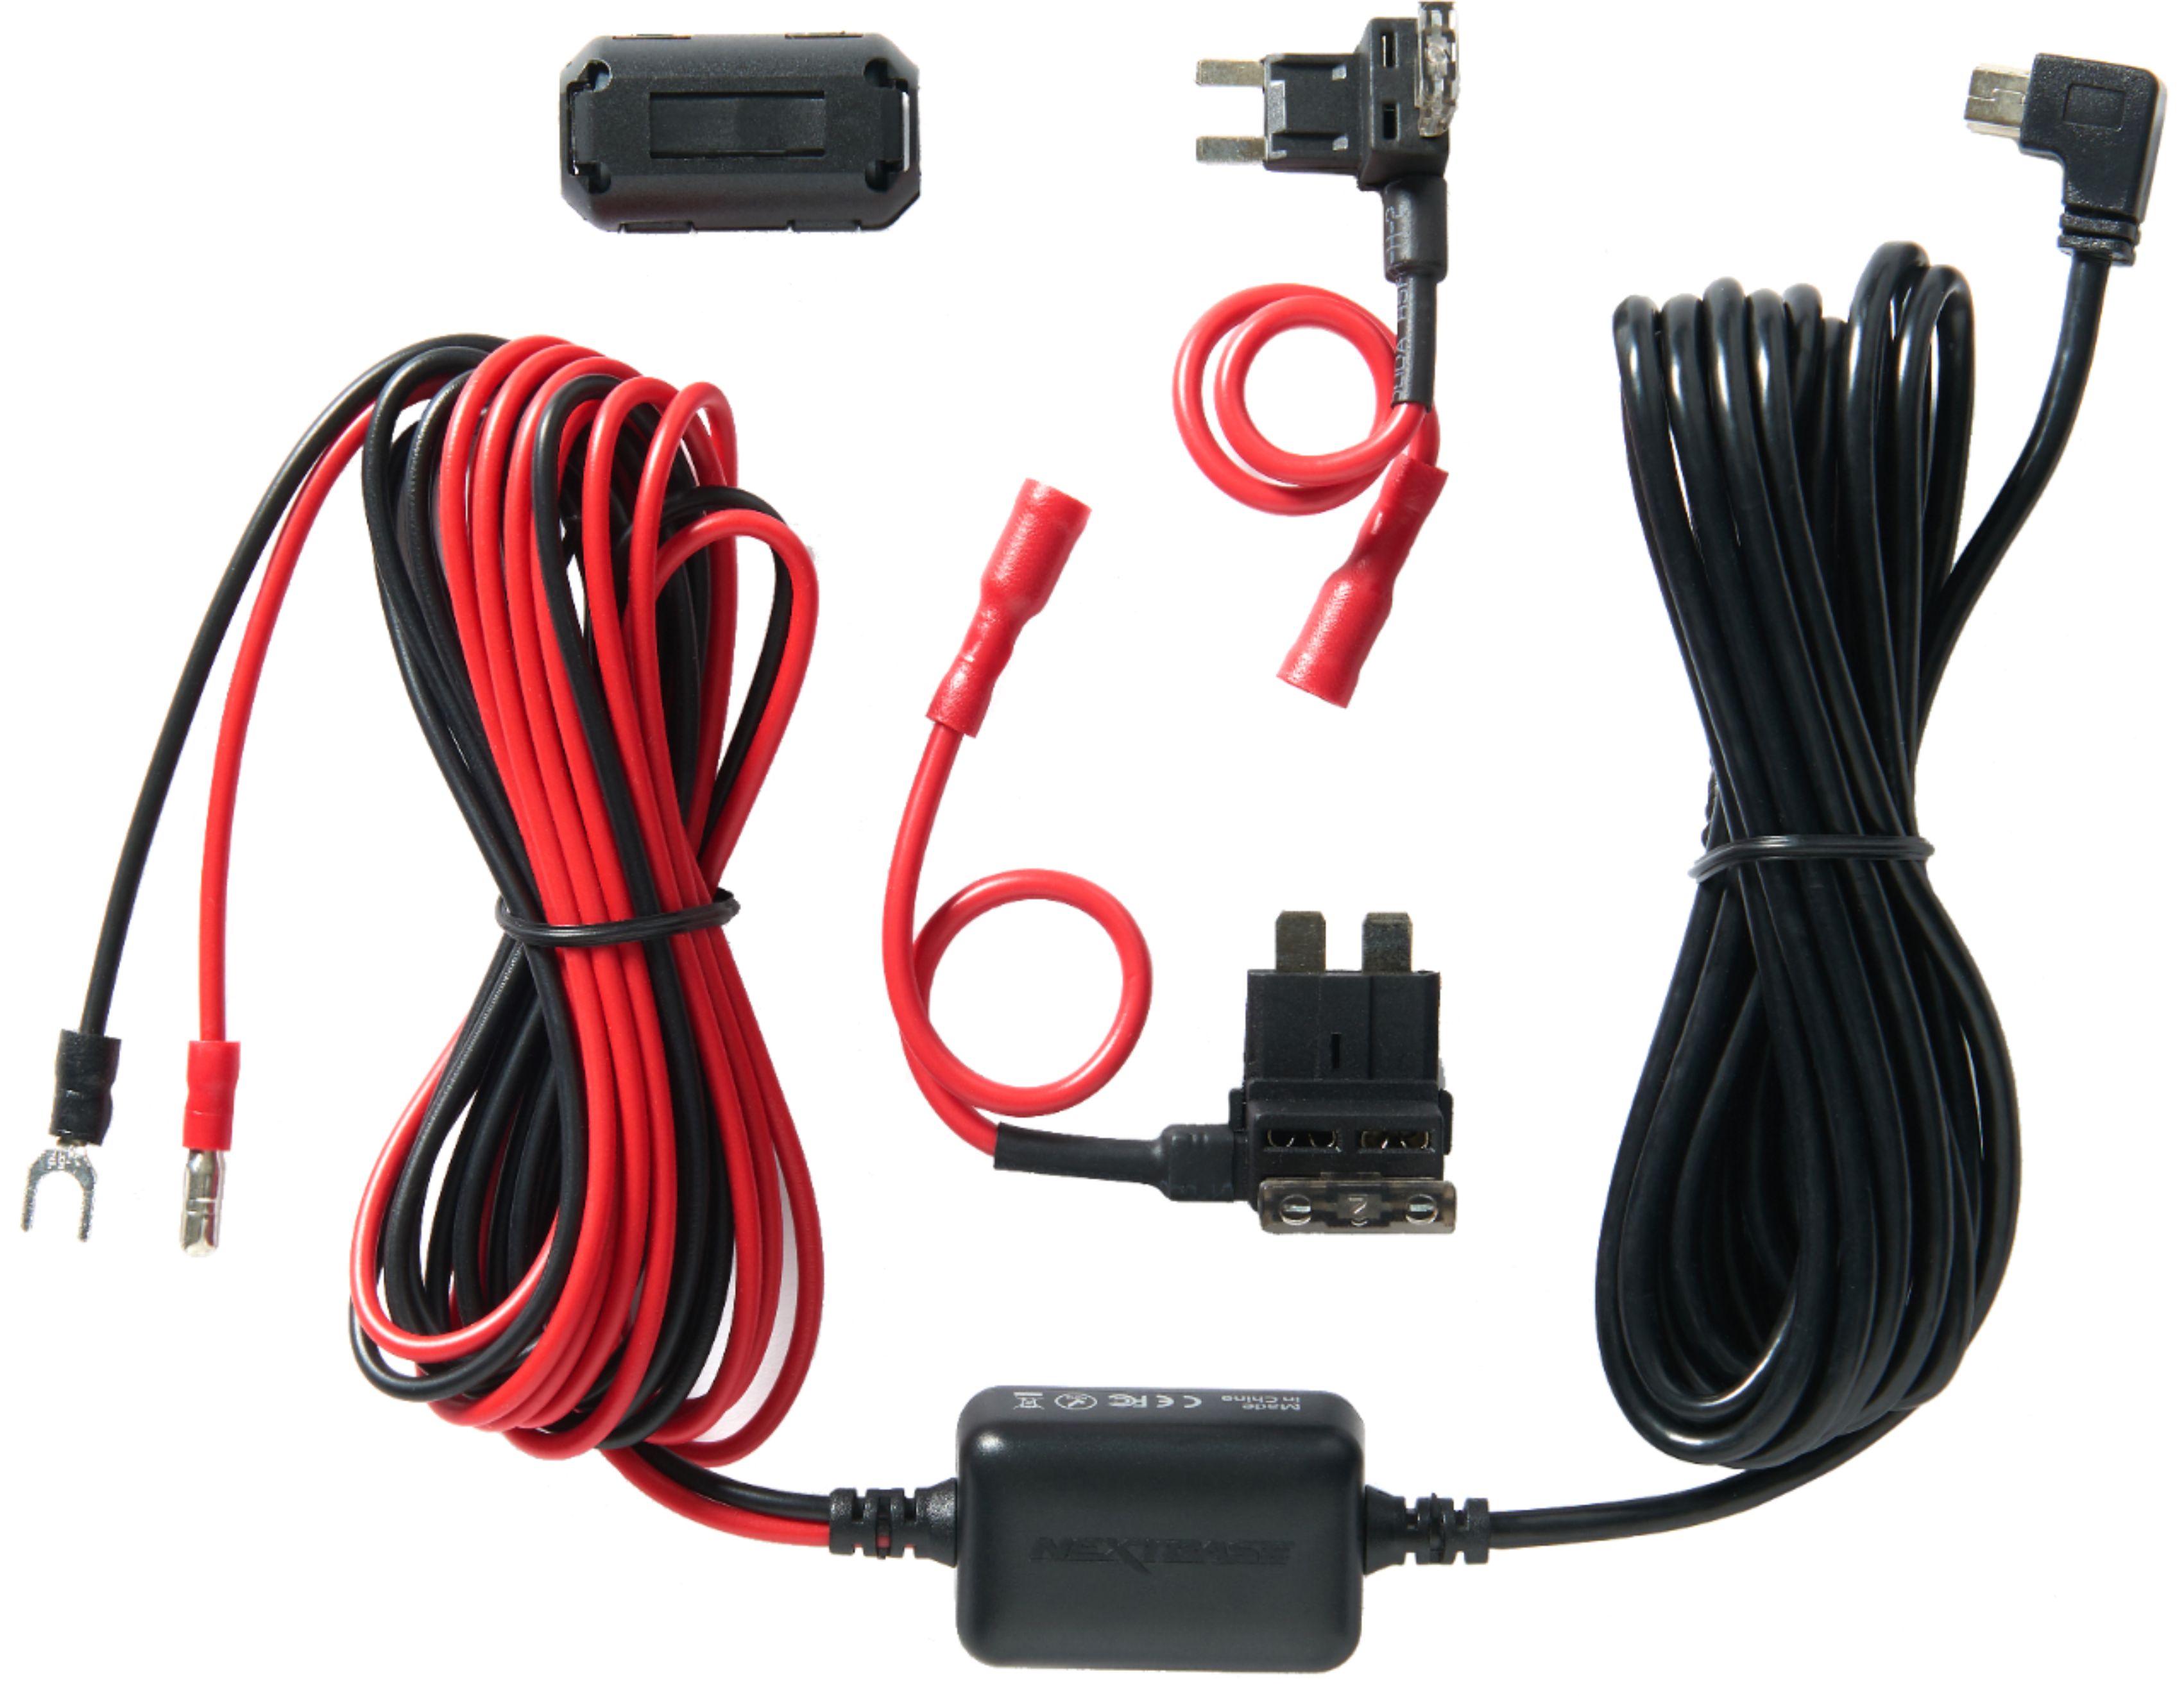 Nextbase Dash Cam Hardwire Kit